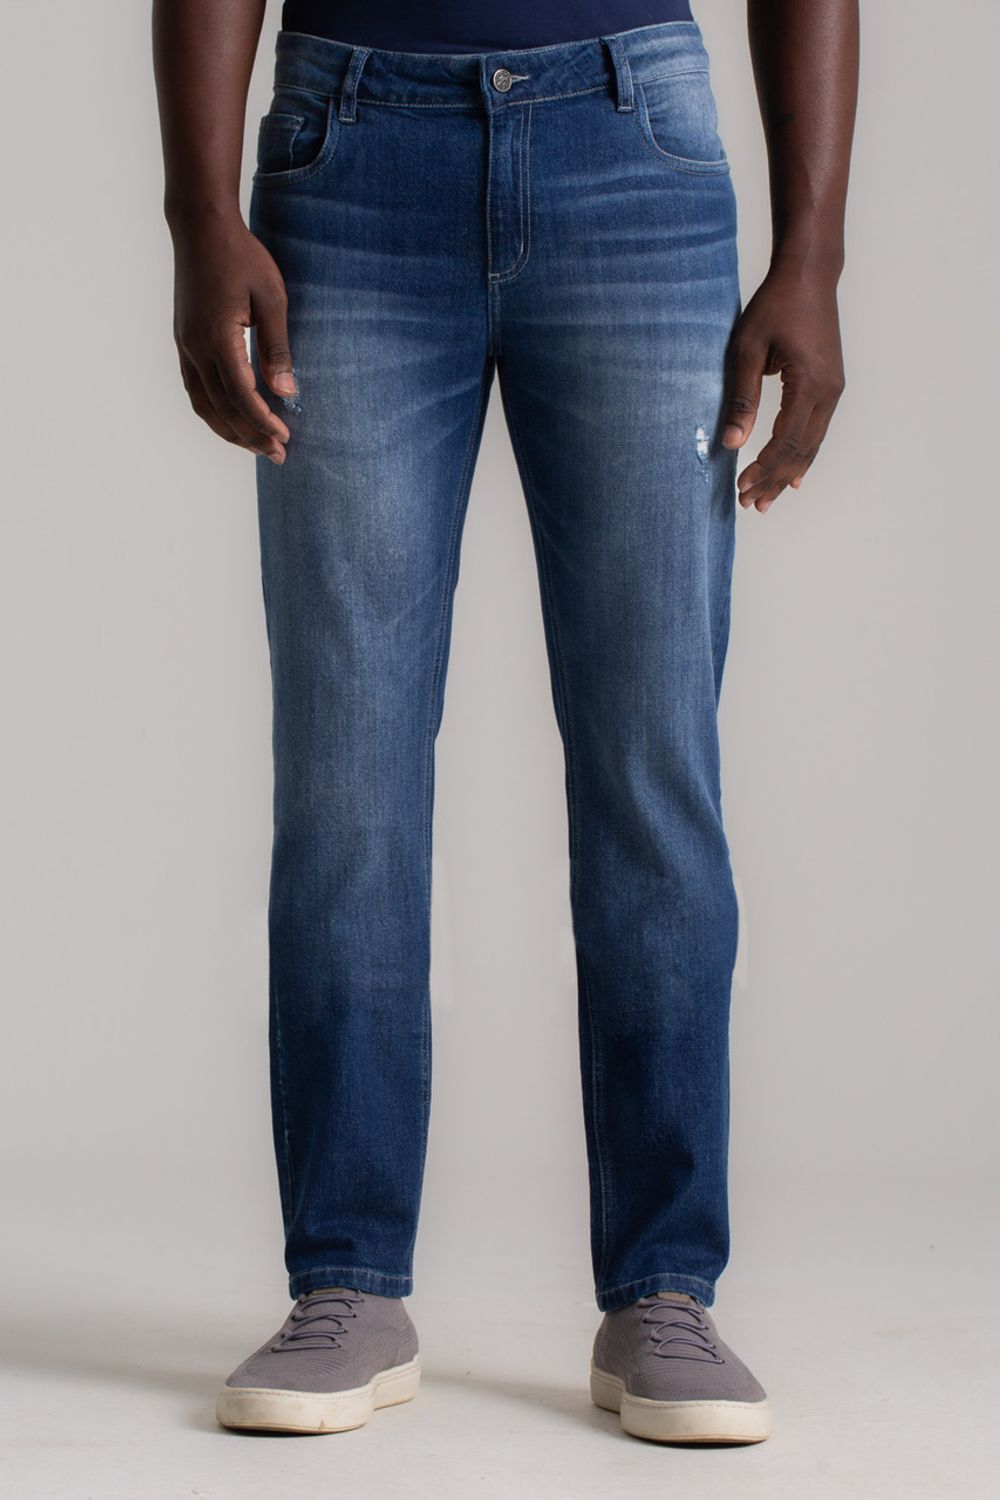 9474-jeans-5_Easy-Resize.com